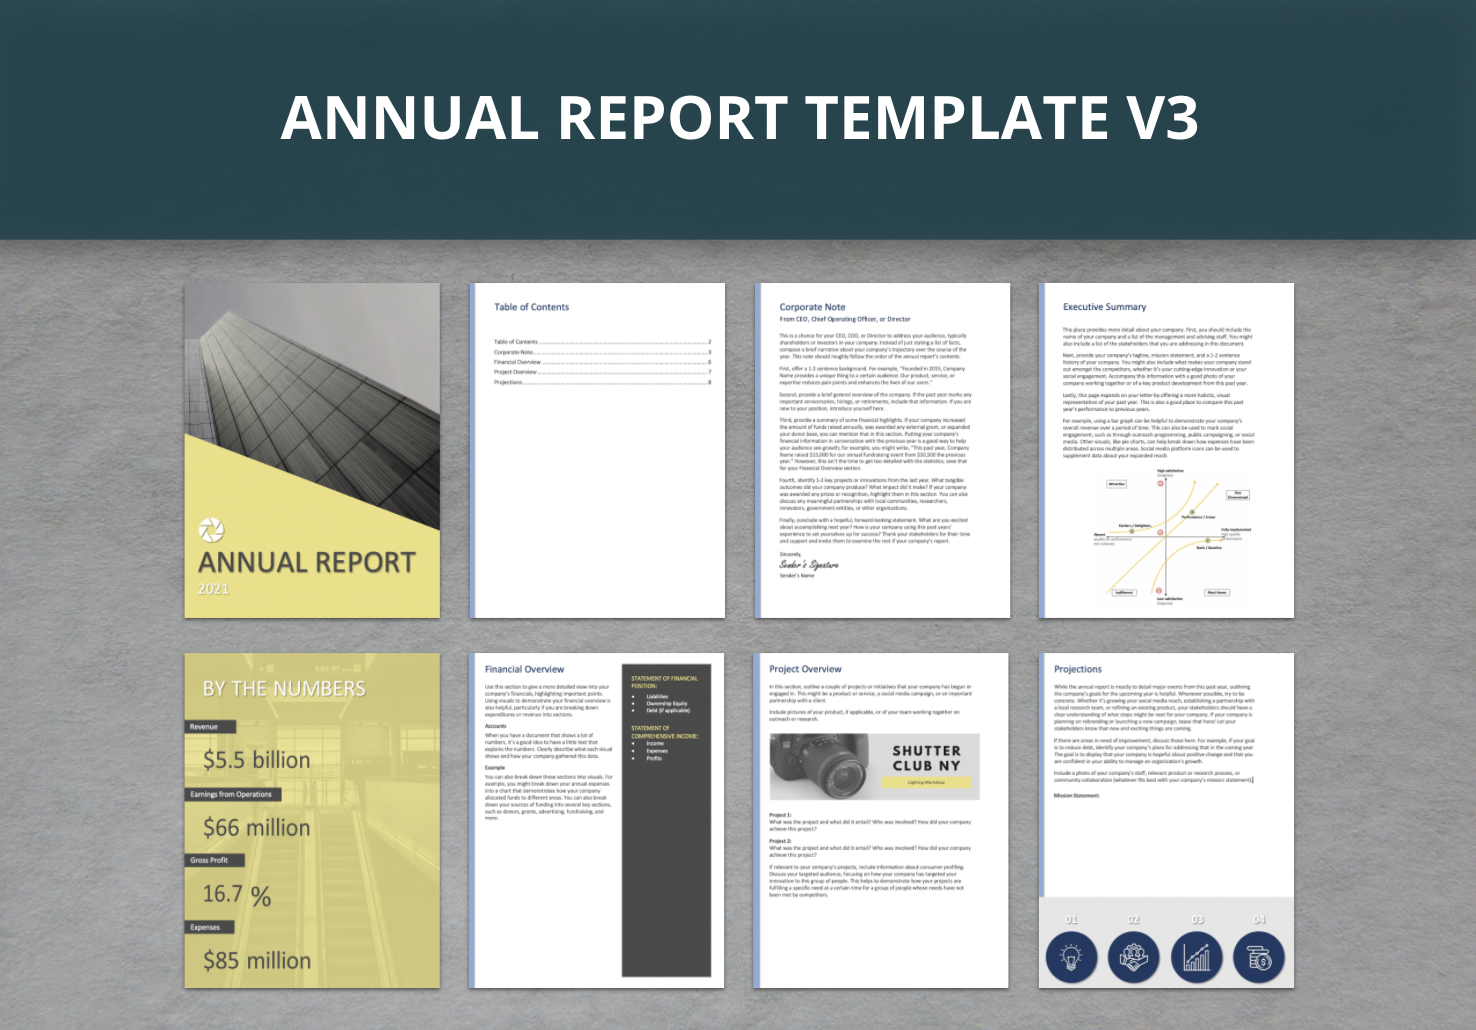 Annual Report template v3